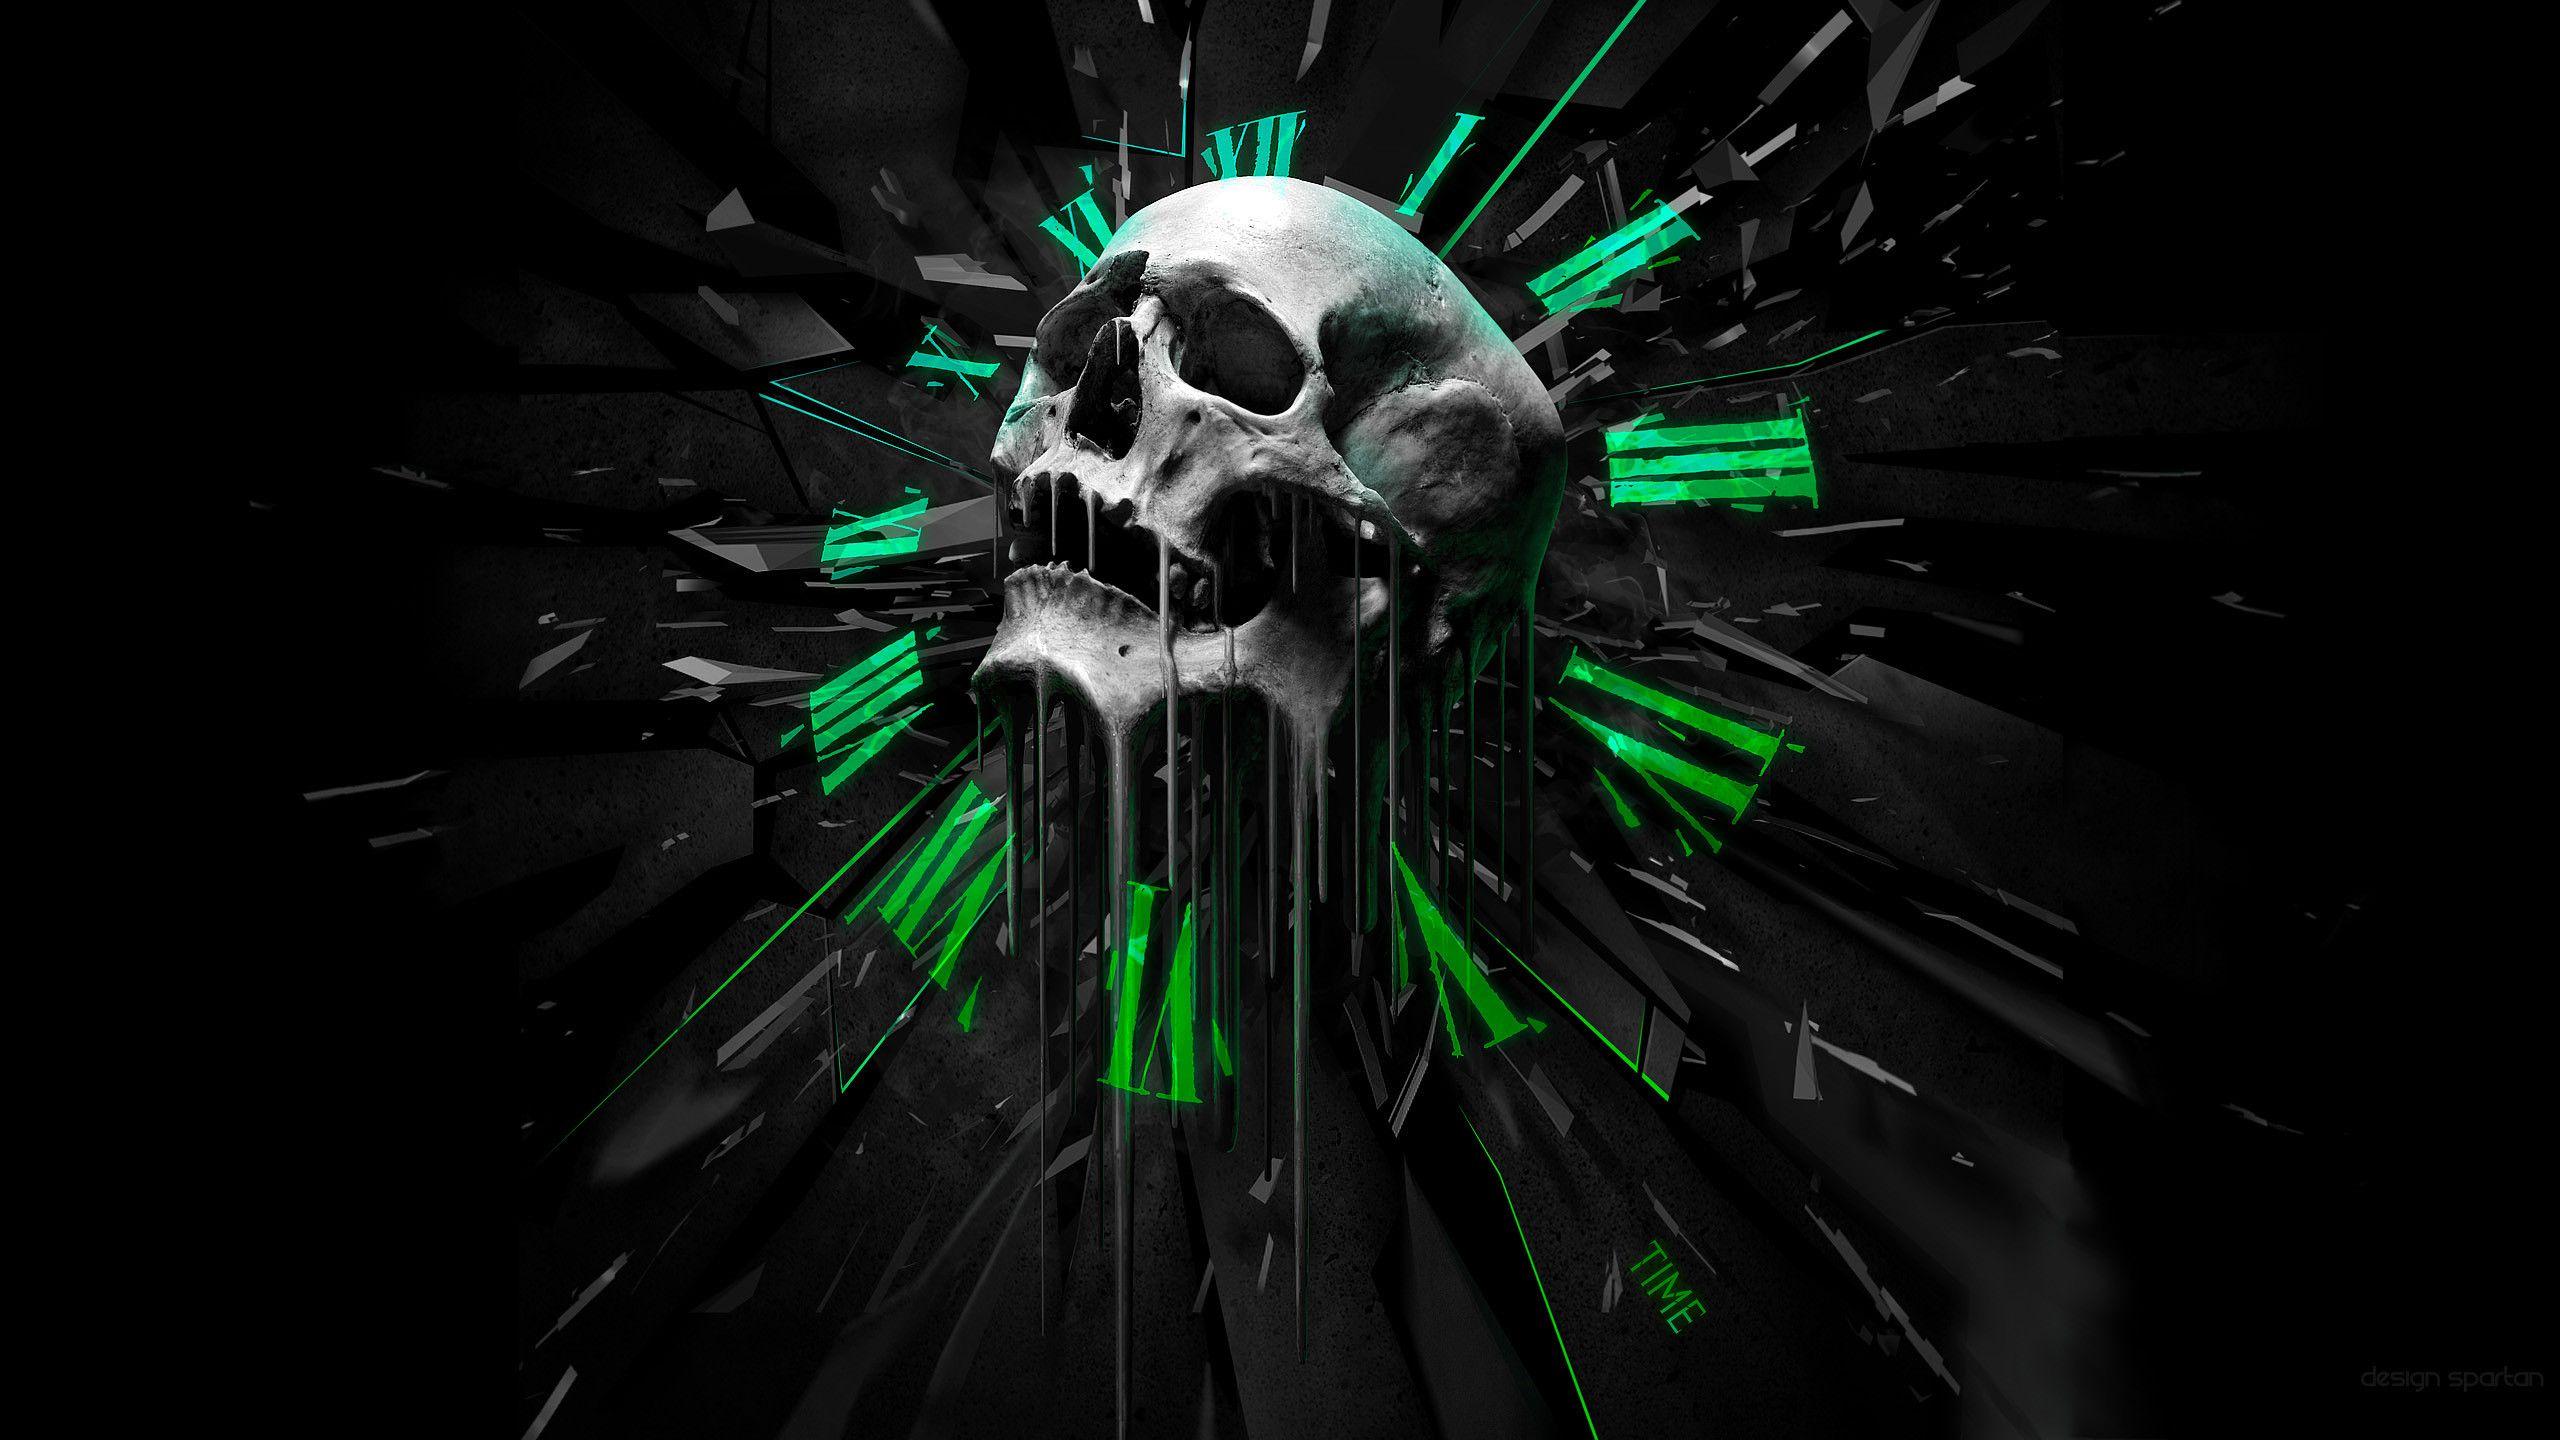 Punisher Skull Wallpaper HD